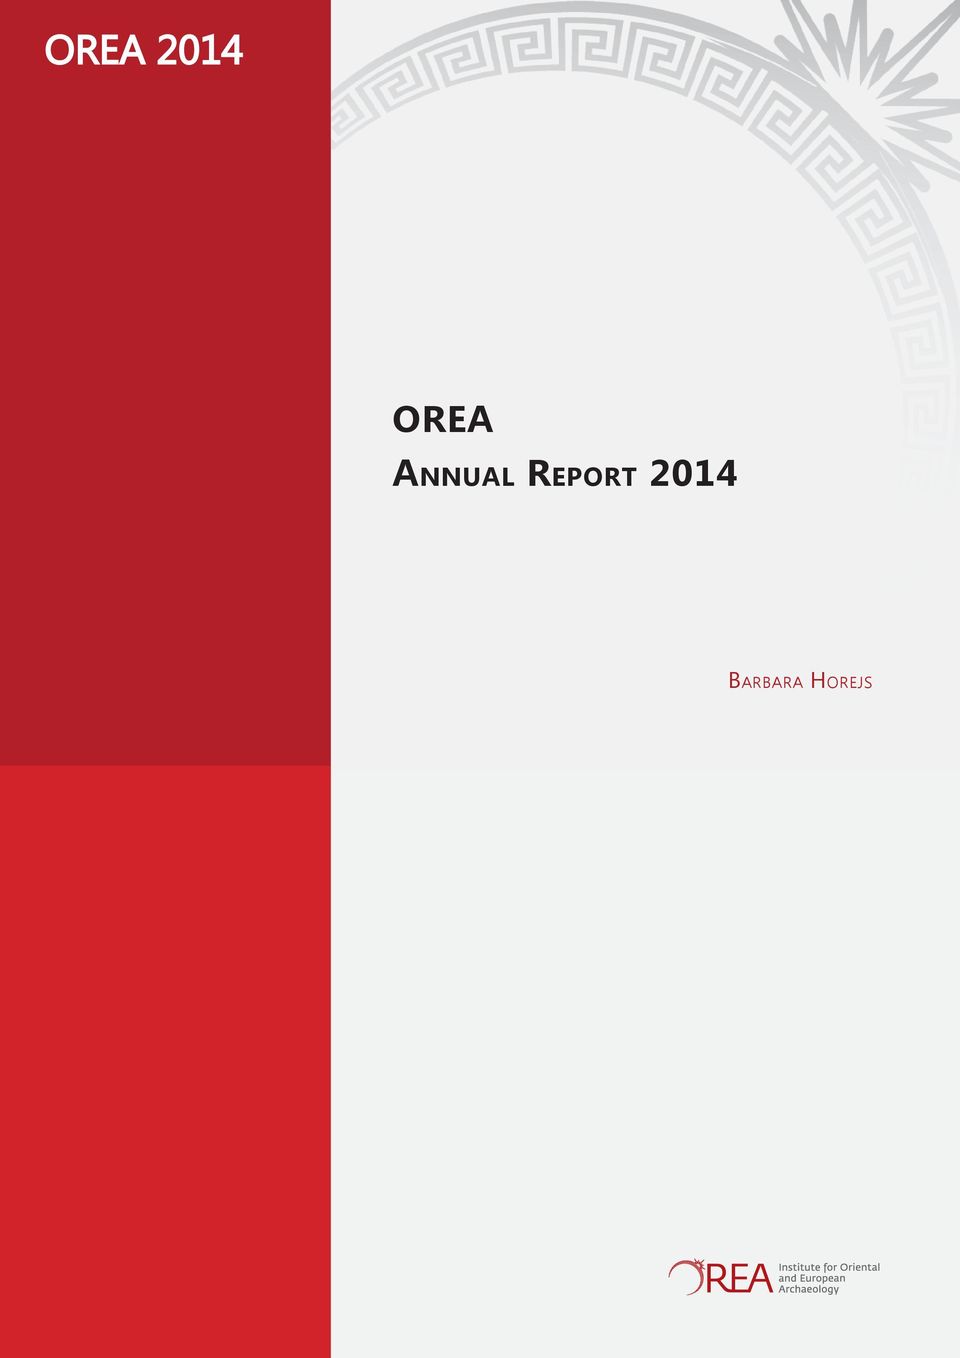 REPORT 2014